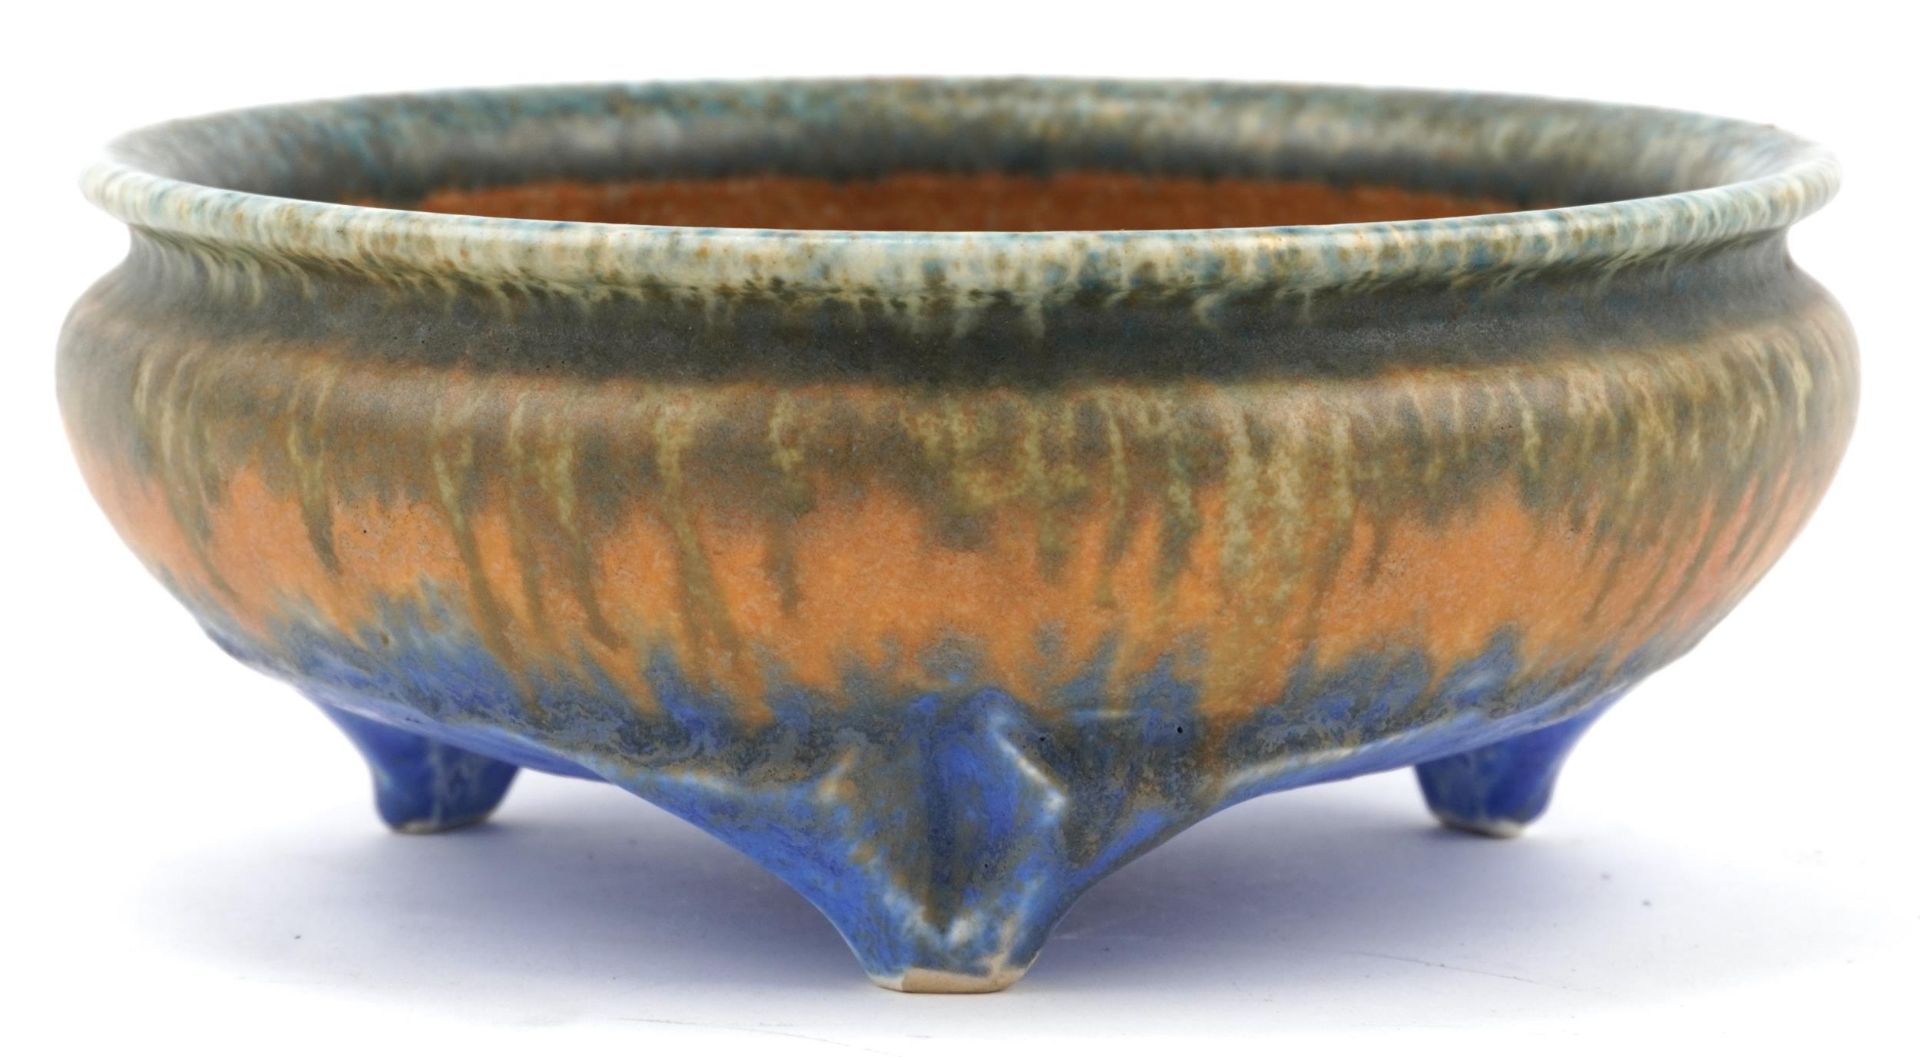 Ruskin, Arts & Crafts three footed bowl having a mottled green, orange and blue glaze, impressed